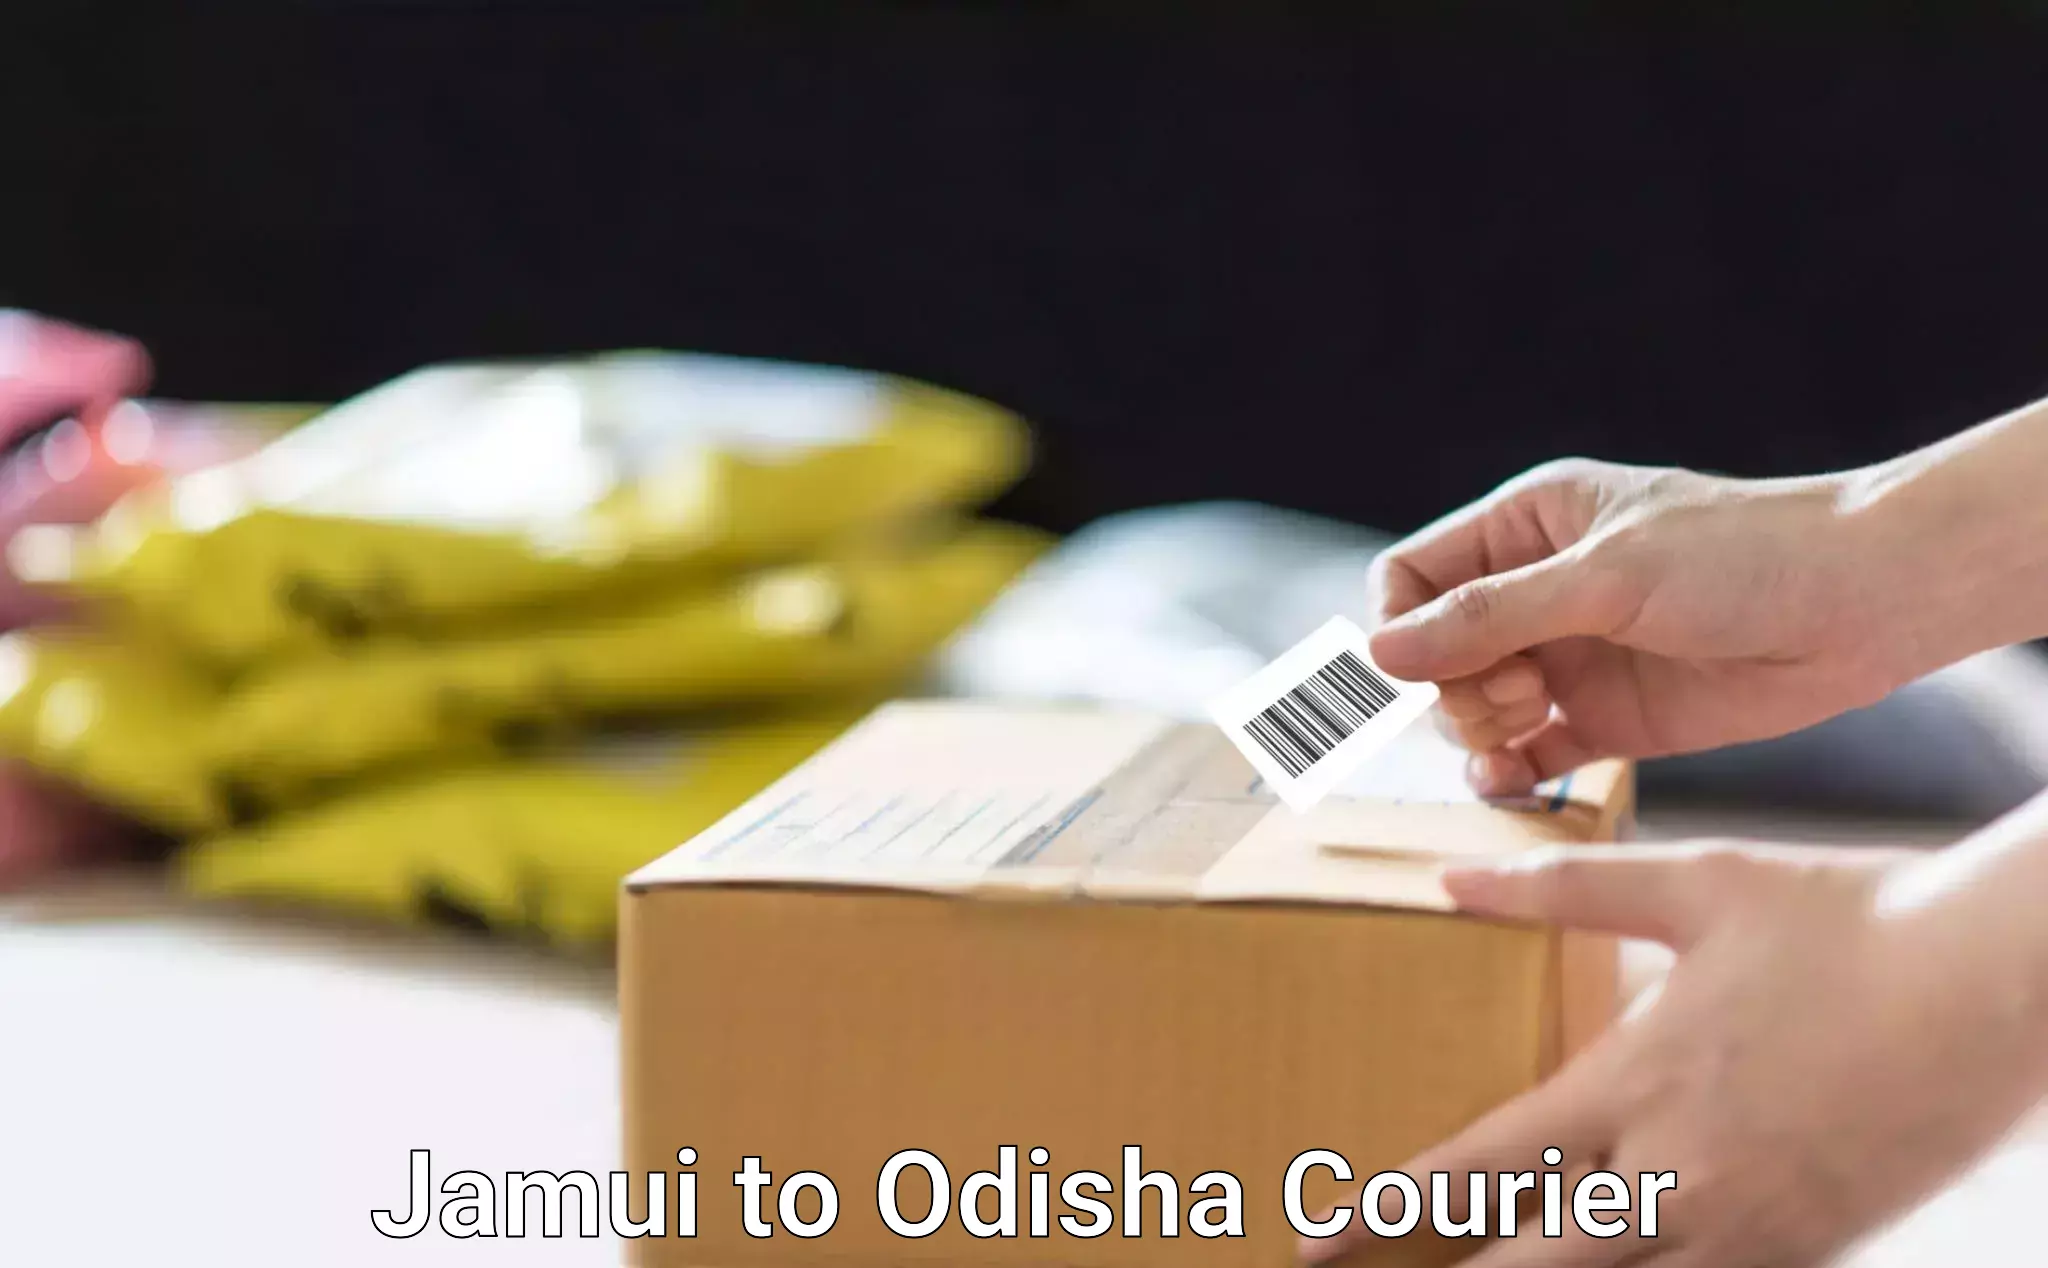 Professional movers Jamui to Odisha